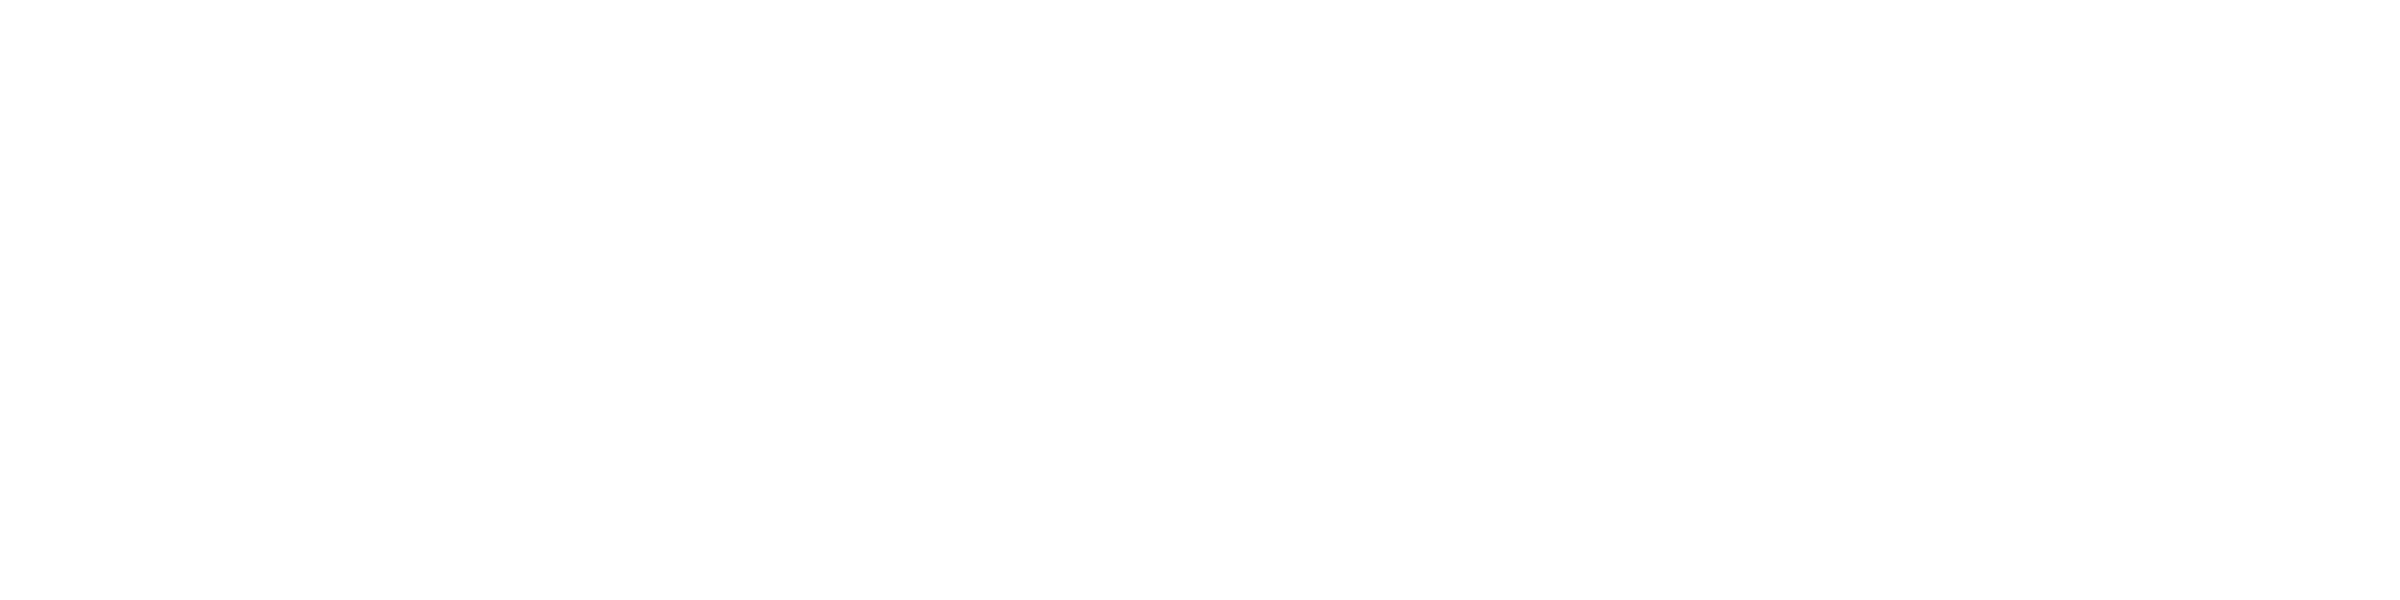 Process Innovation Team - UC Santa Barbara